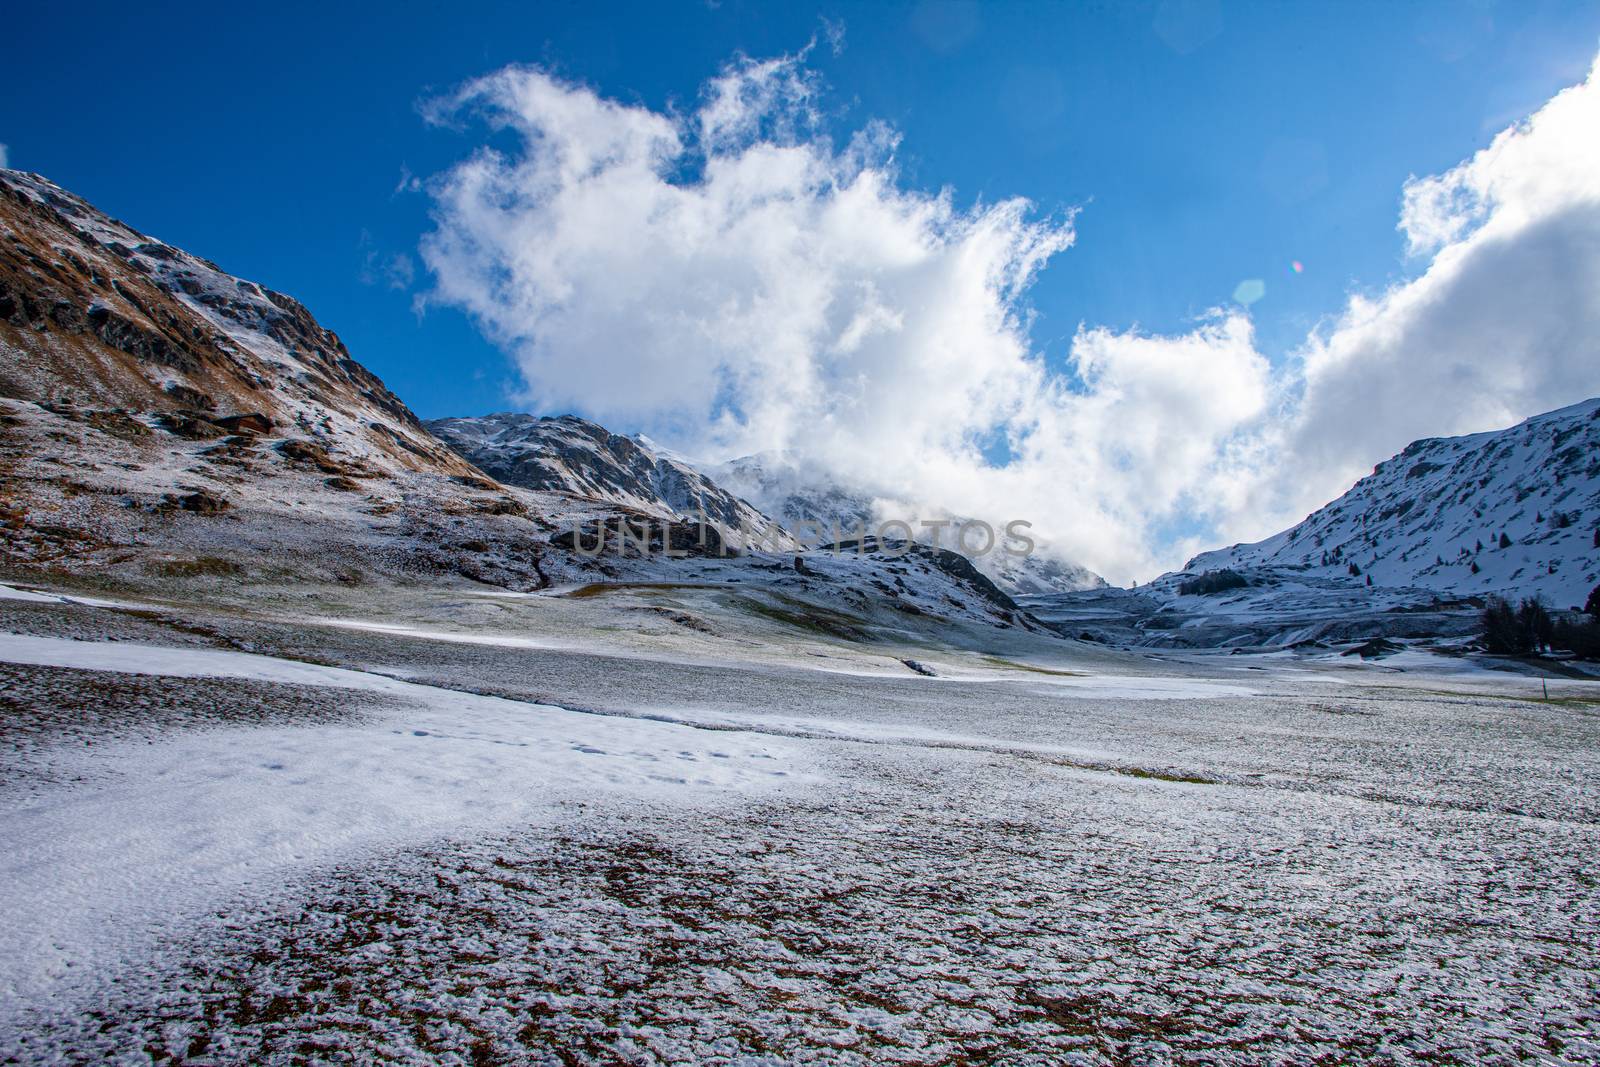 Alpine pass in switzerland, Julierpass in swiss alp with snow by PeterHofstetter